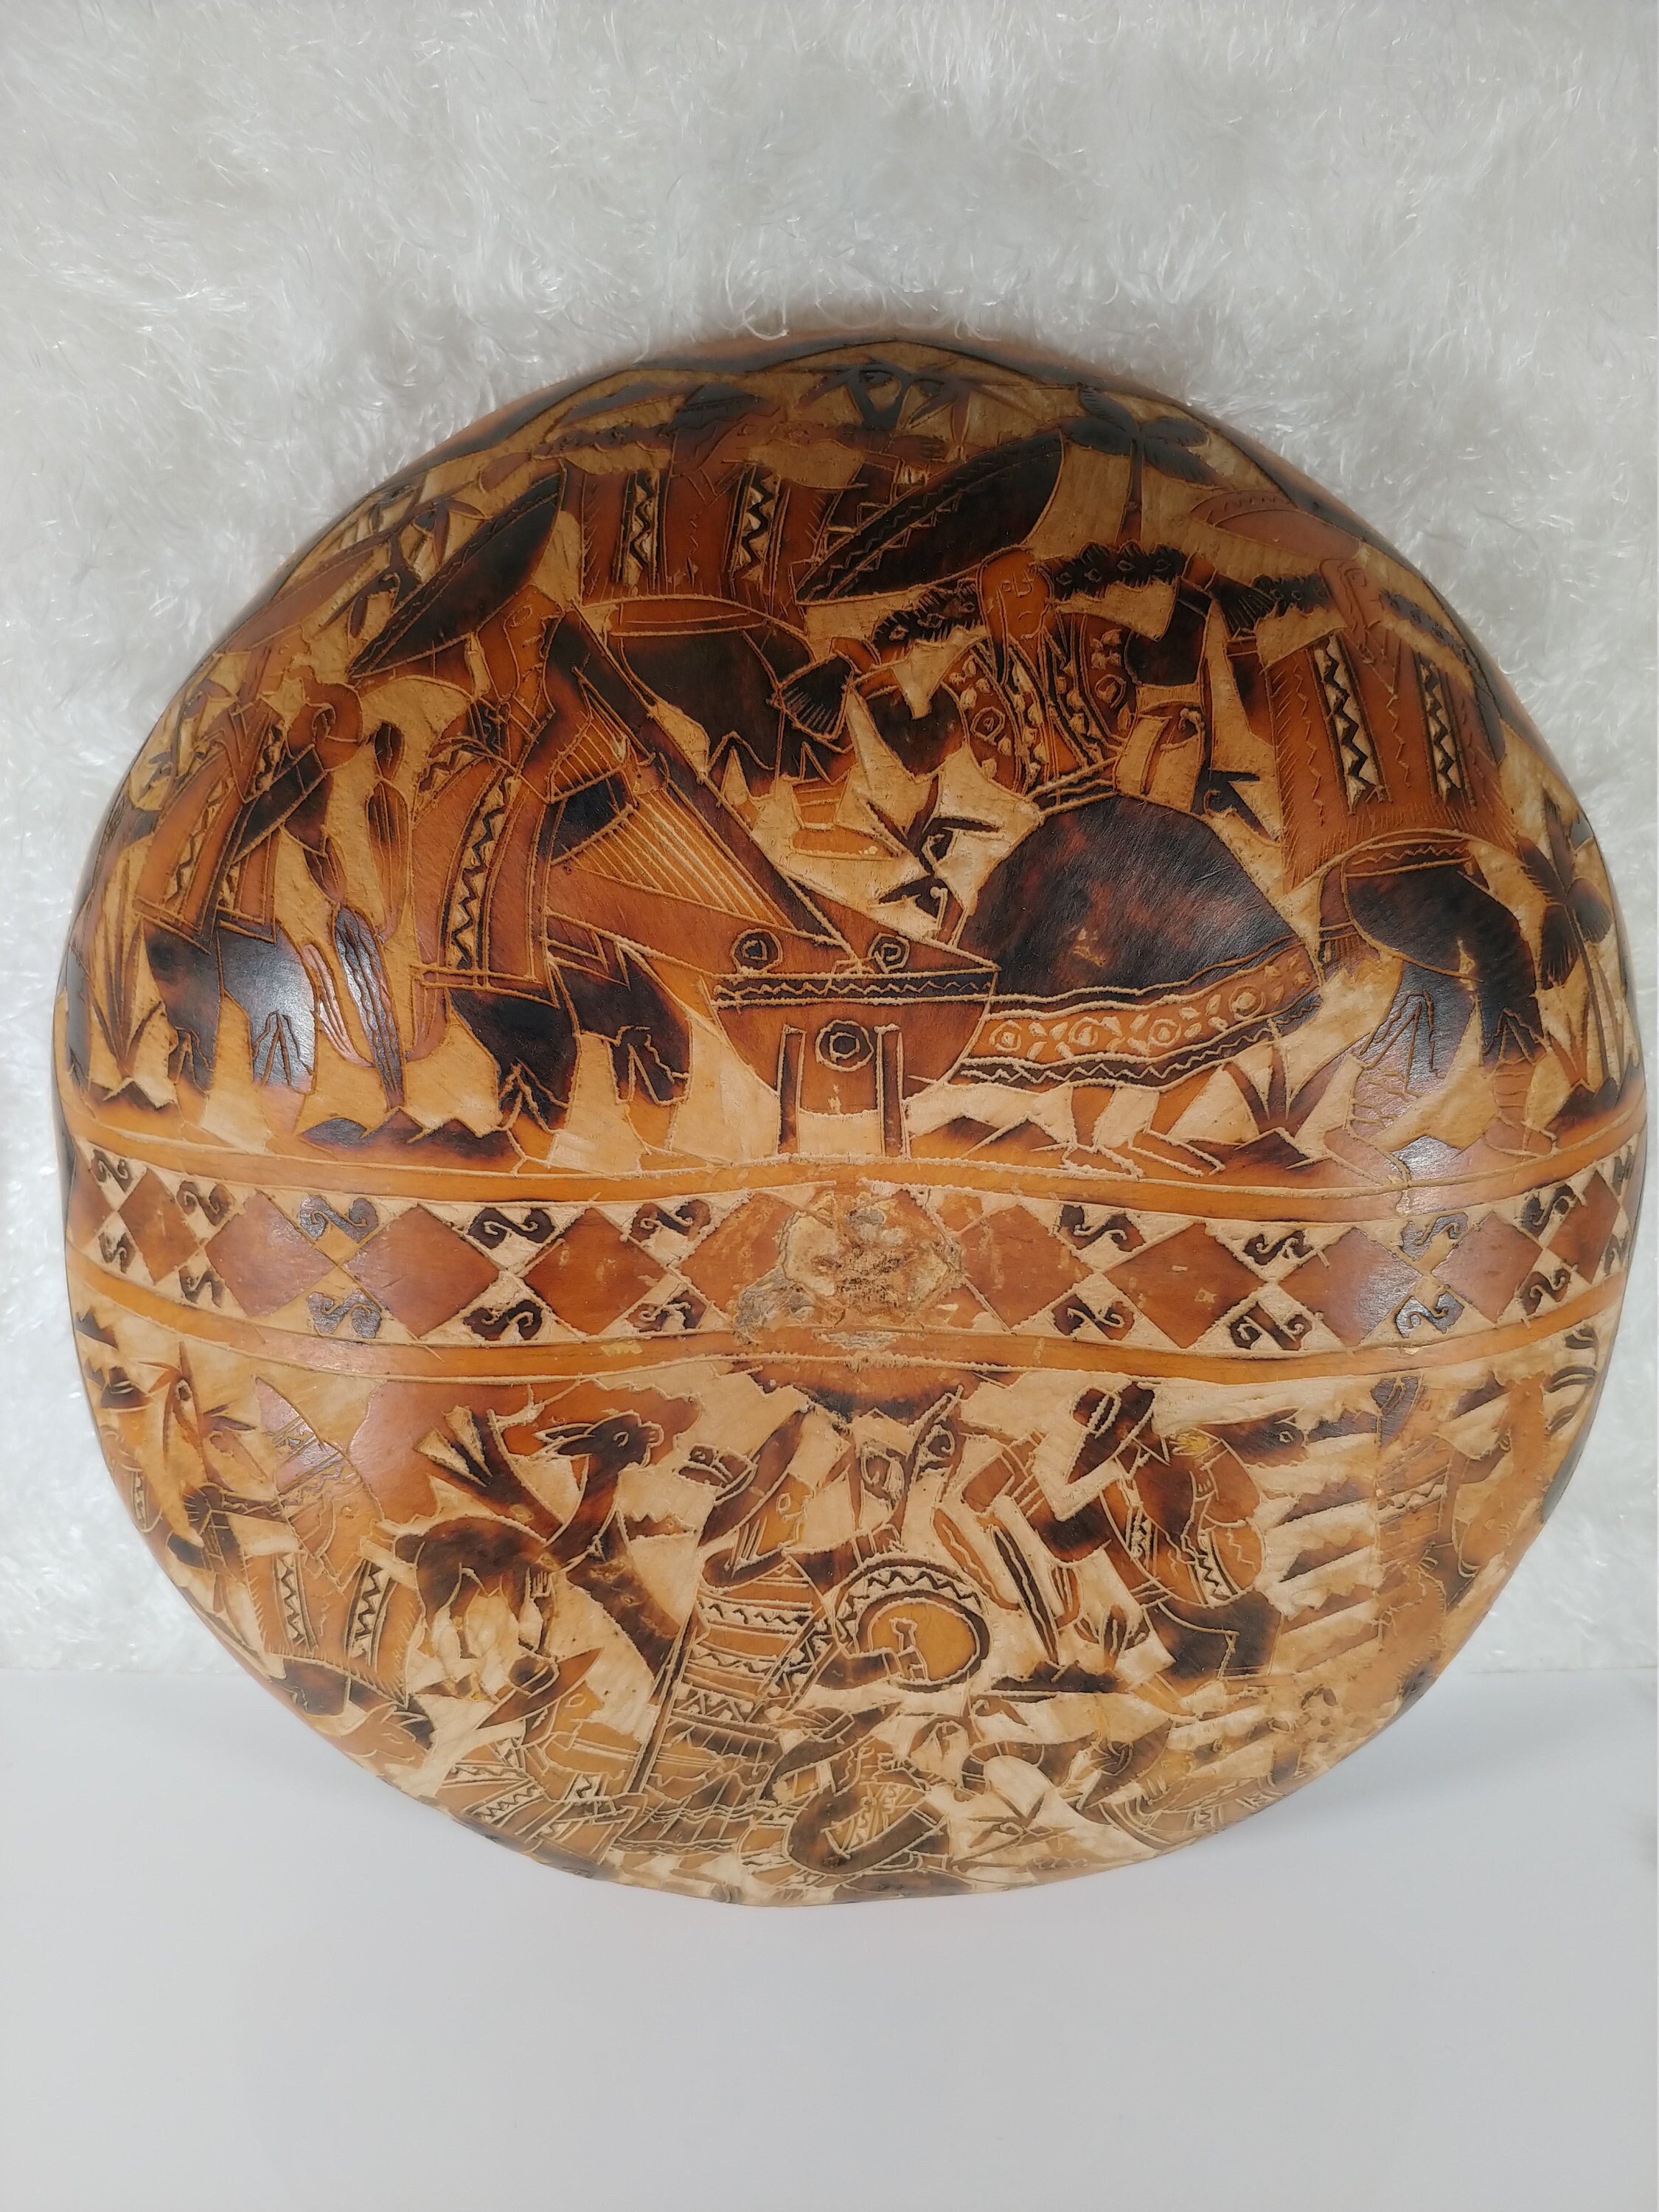 Primitive Folk Art Vintage Pyrography Art on Calabash Gourd Chad Hand Carved Bowl Gallery Wall Hanging Tribal Artwork Natural Decor